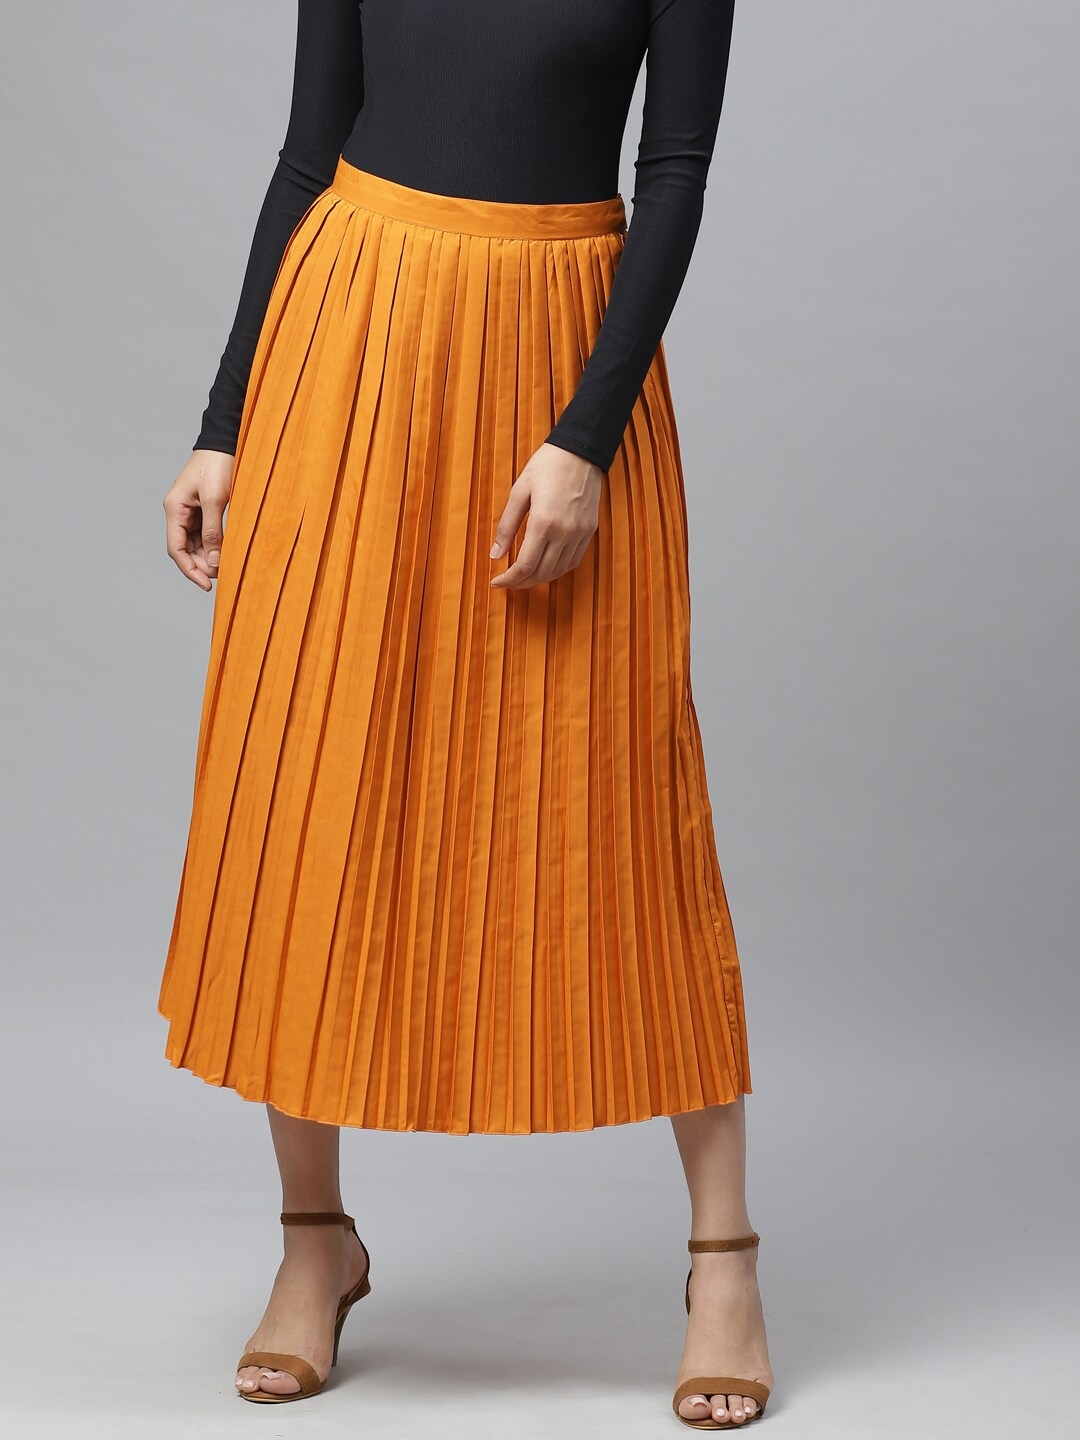 Capreze Ladies Mini Skirts Ruffle Skort High Waist Short Skirt Pleated  Skorts Solid Color Orange 2XL - Walmart.com